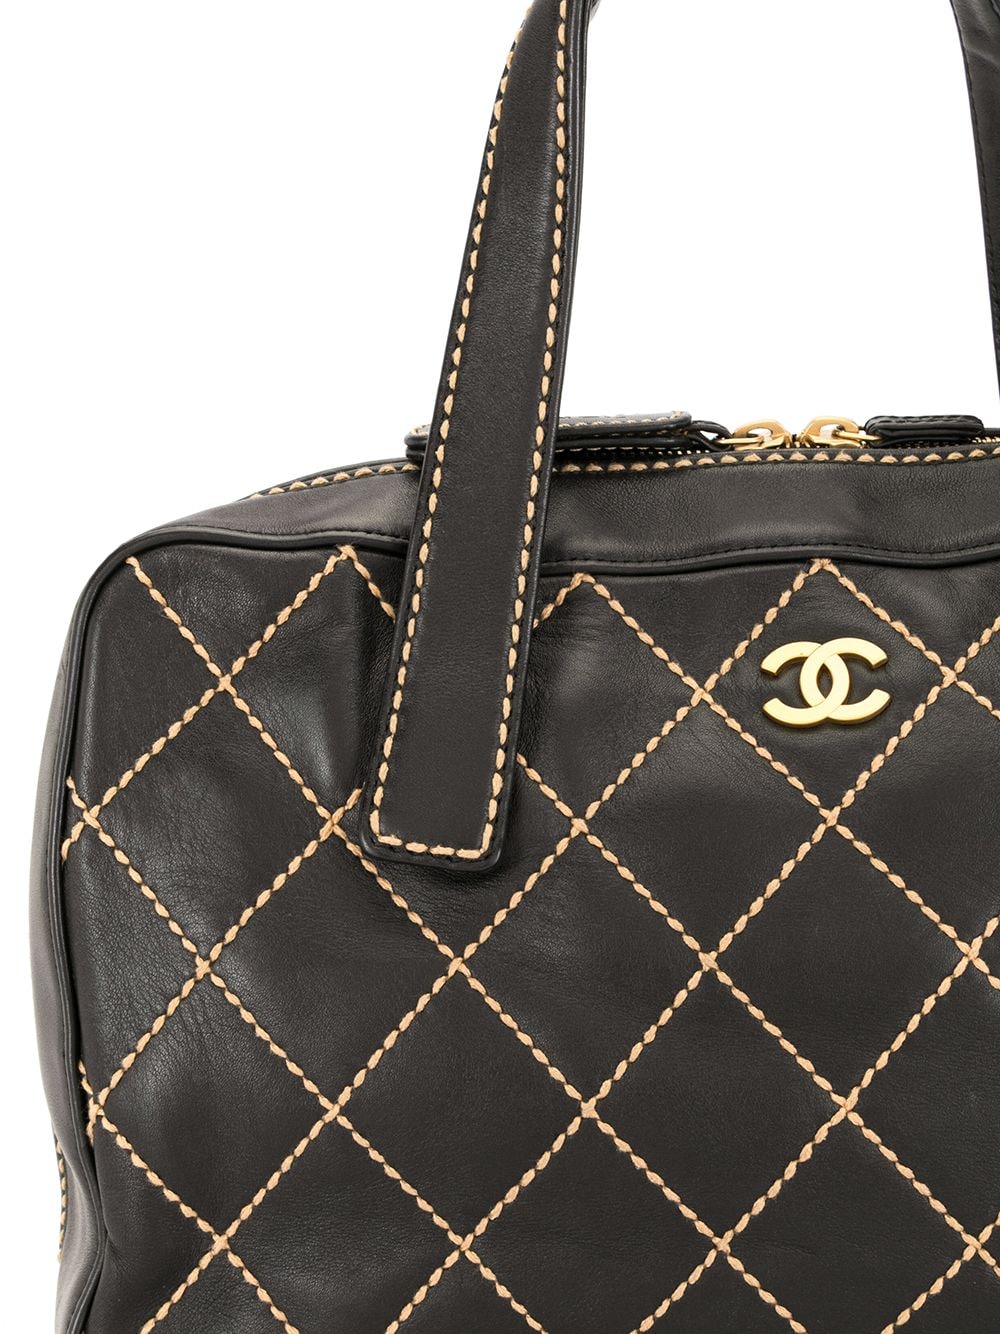 Chanel Beige Leather Wild Stitch Boston Bag Q6B04J43IB005